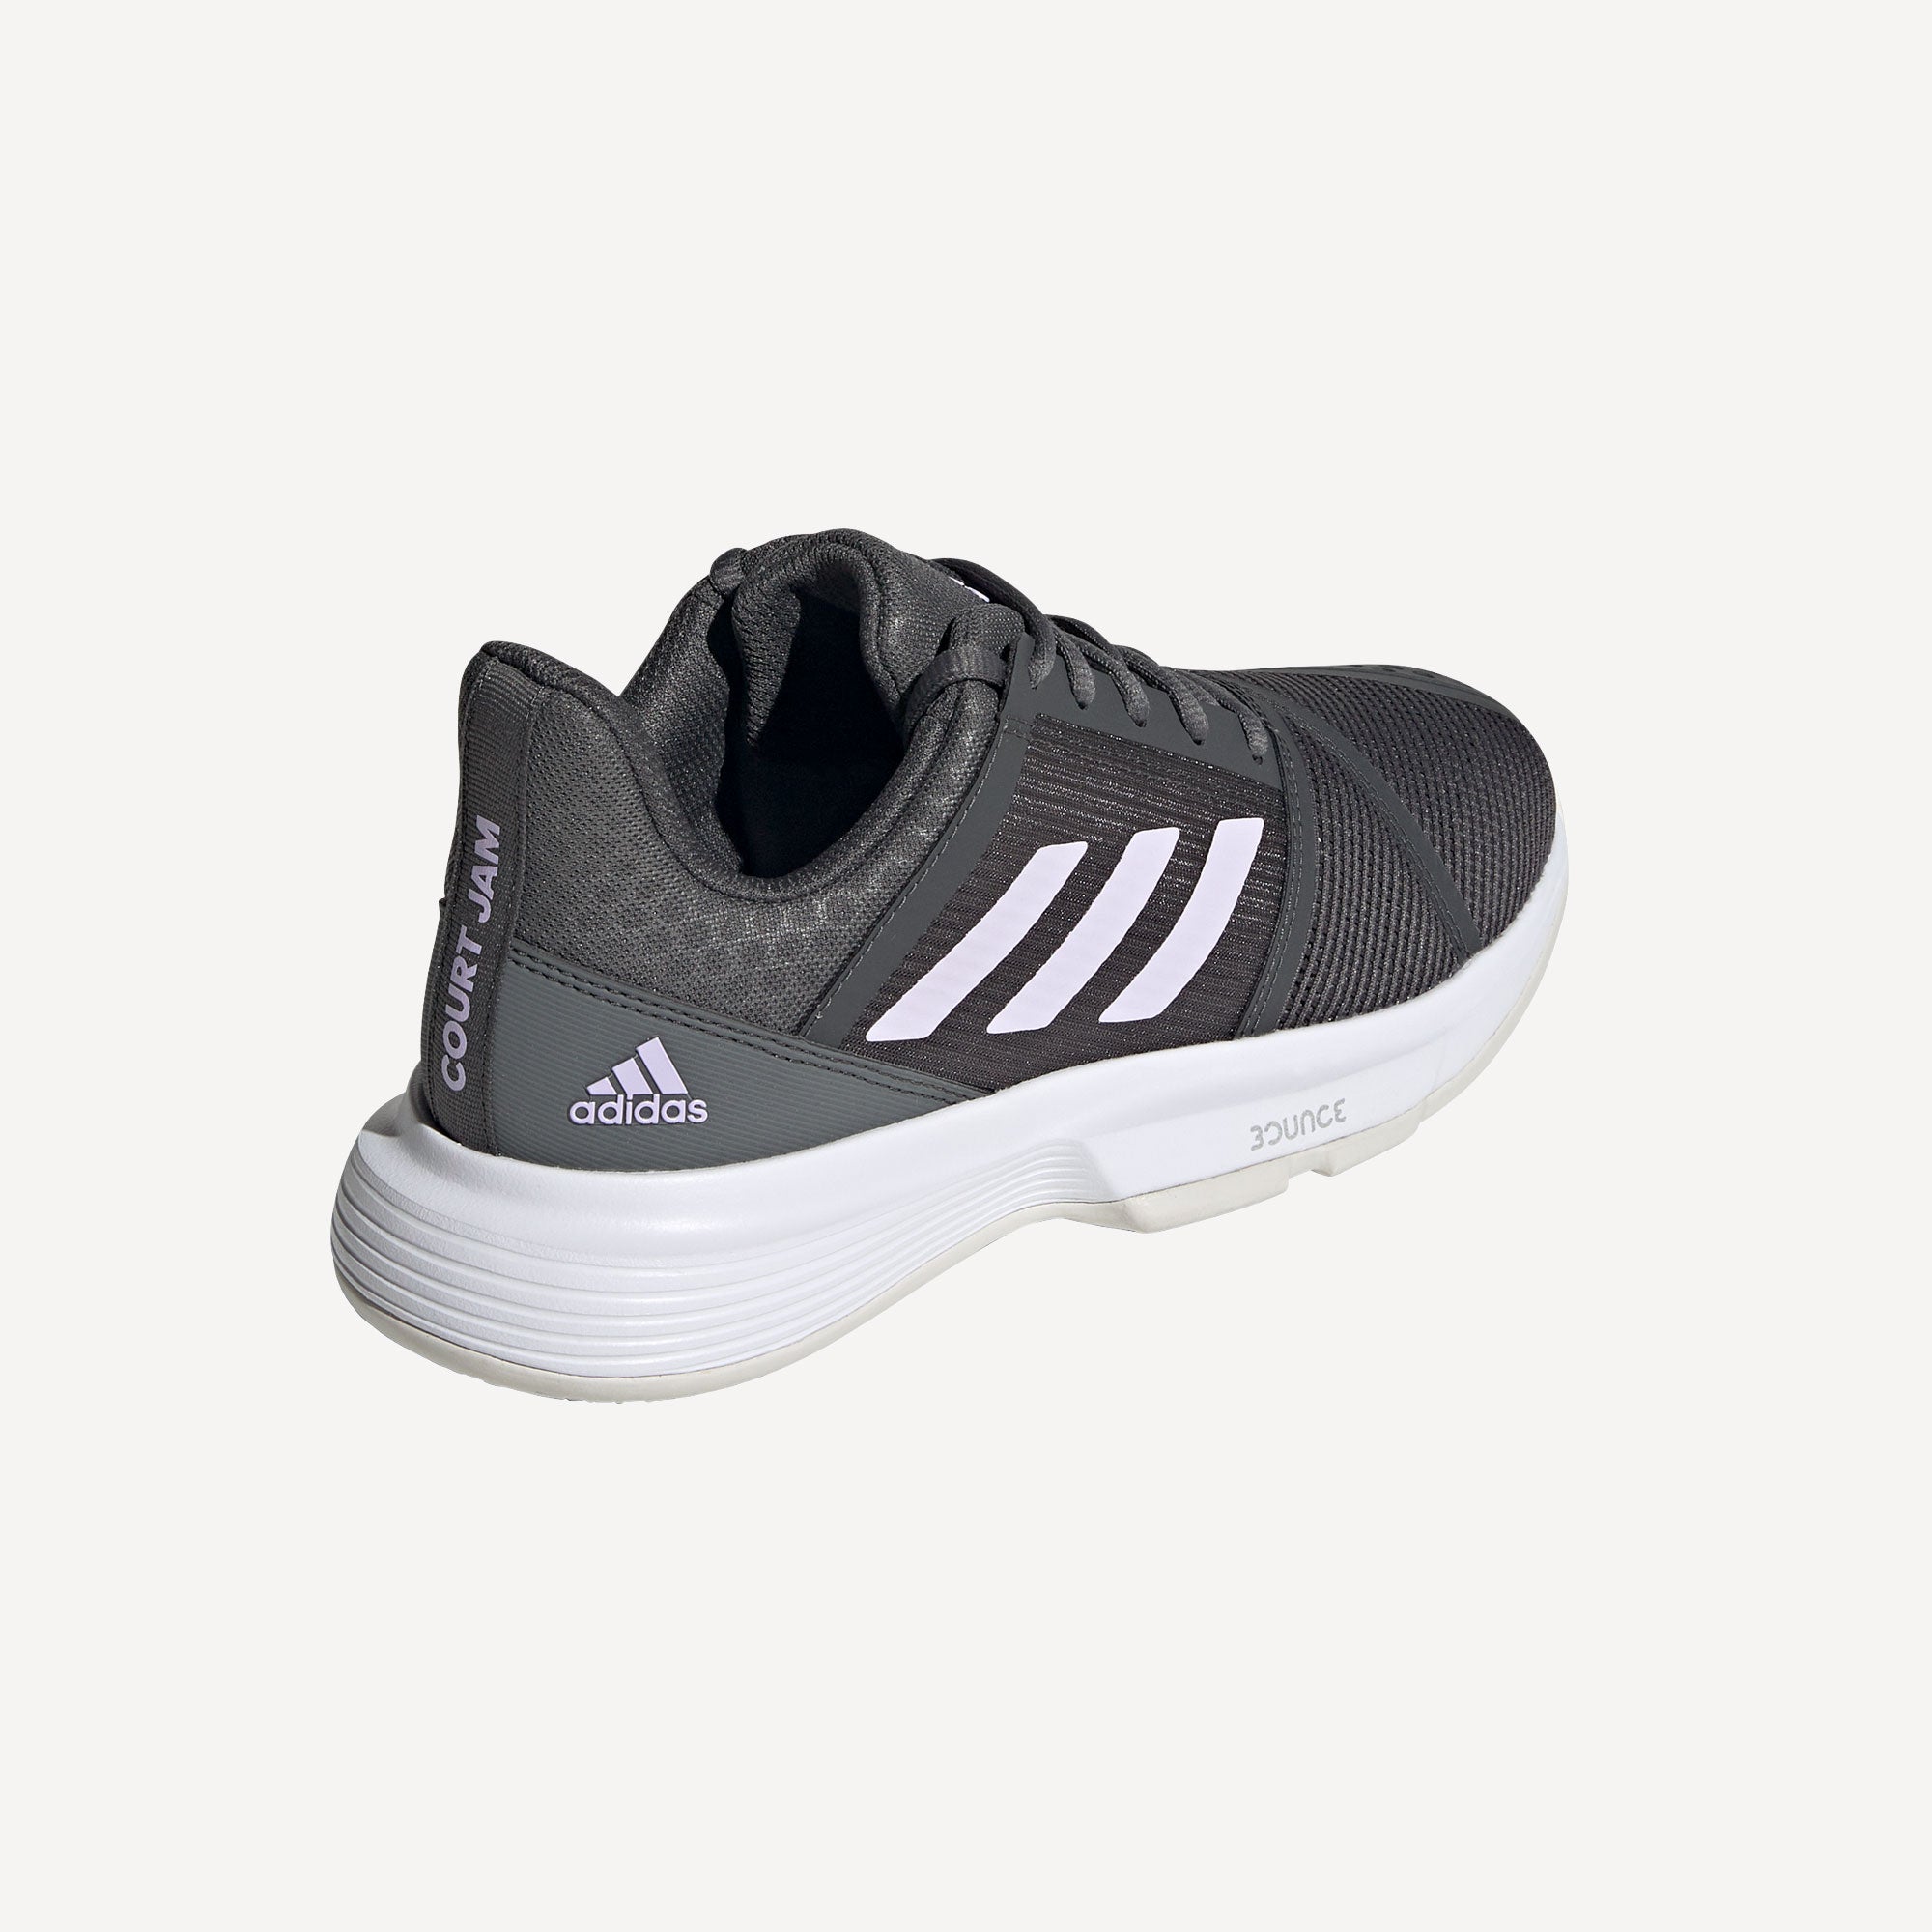 adidas Court Jam Bounce Women's Hard Court Tennis Shoes Grey (5)